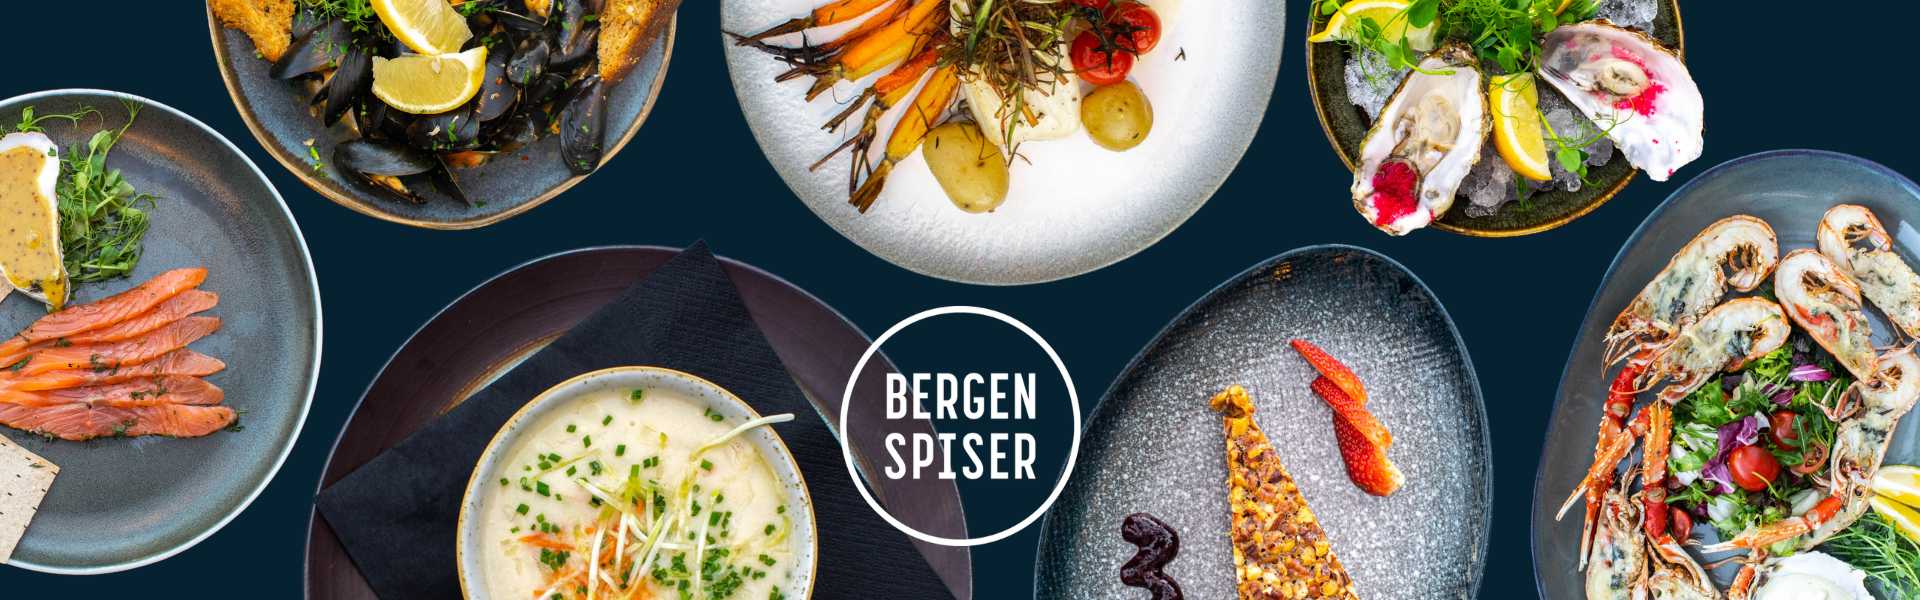 Bergen Spiser restaurantfestival